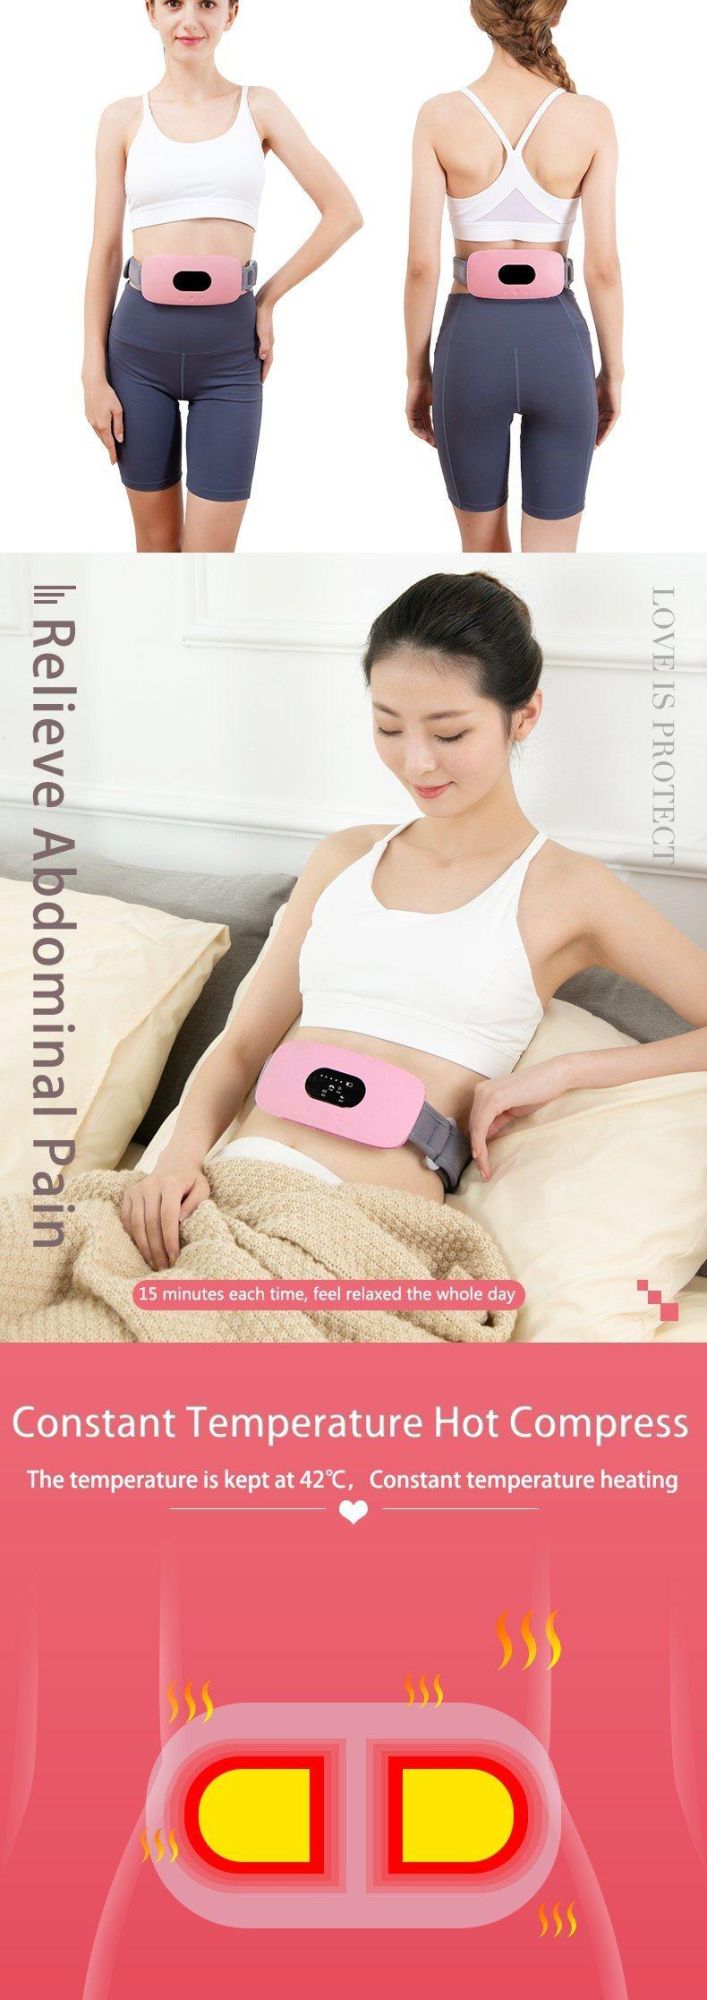 Hezheng EMS Vibration Massager Slimming Machine Belt Machine Spiral Fat Burning Massage Belt